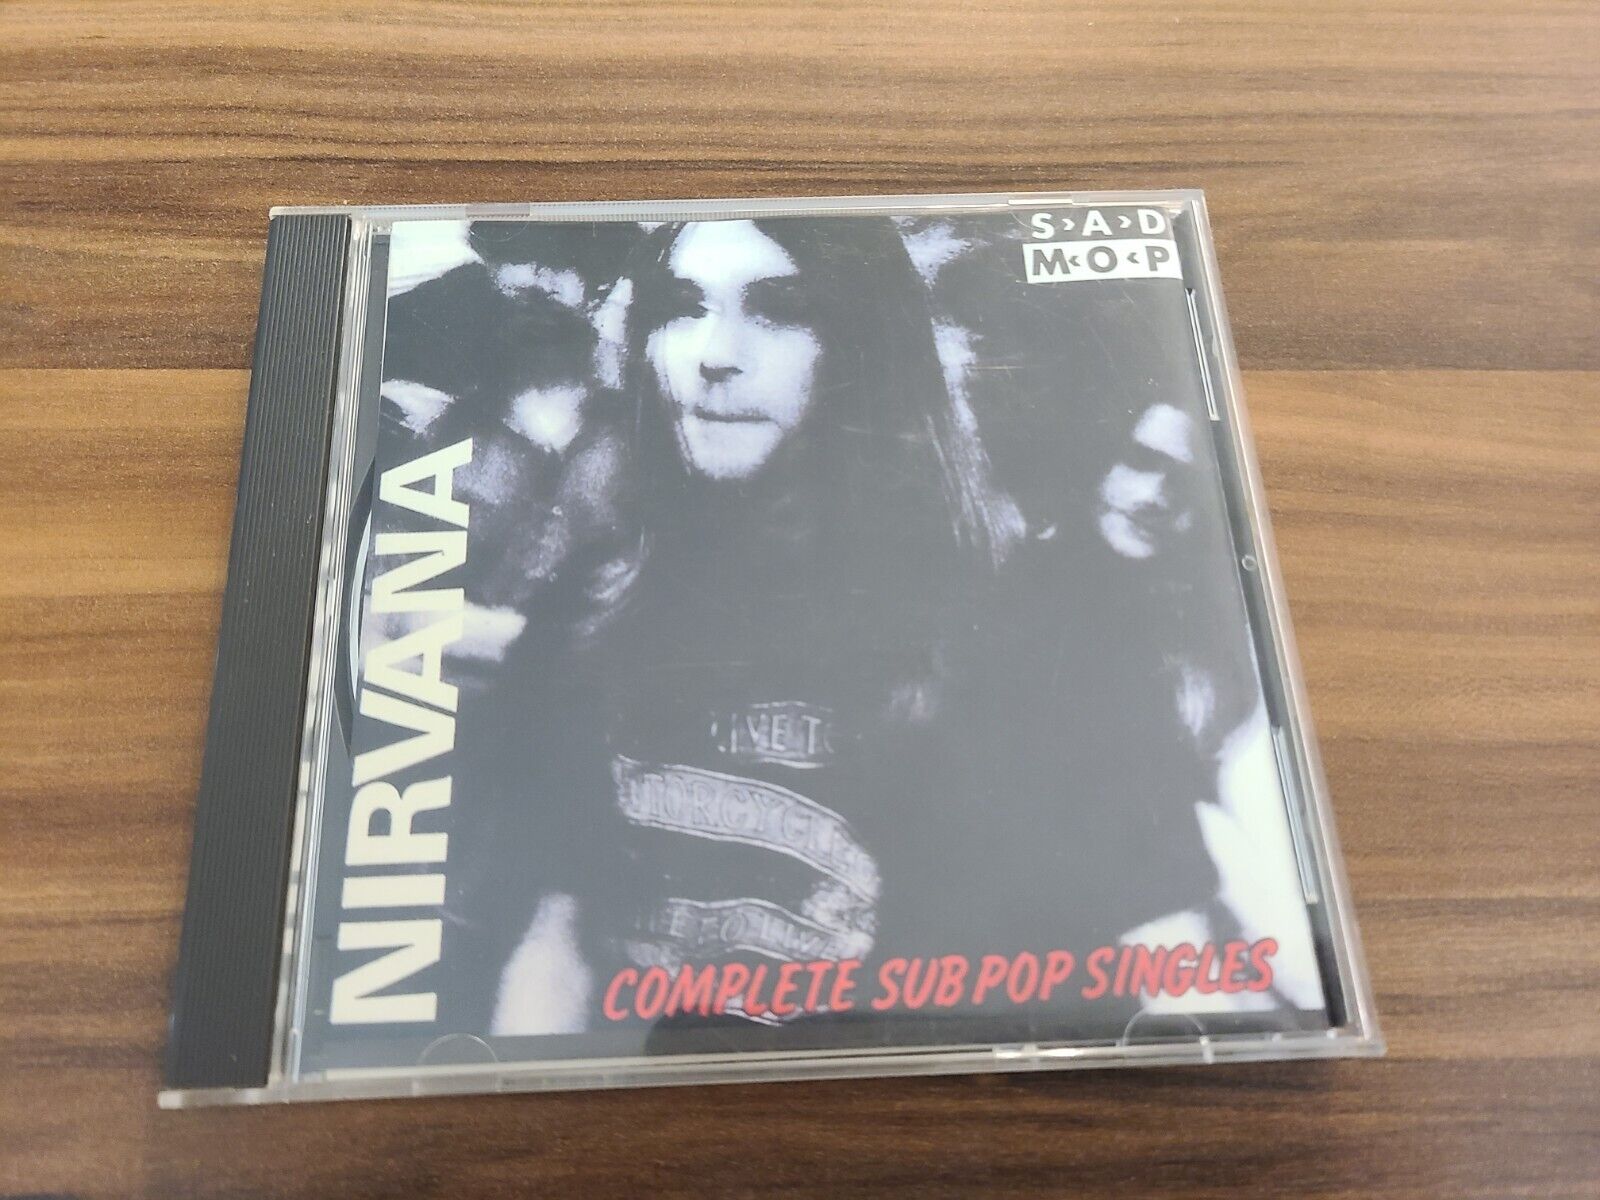 Nirvana Vintage 1988 Sad Mop Complete Sub Pop Singles CD Rare